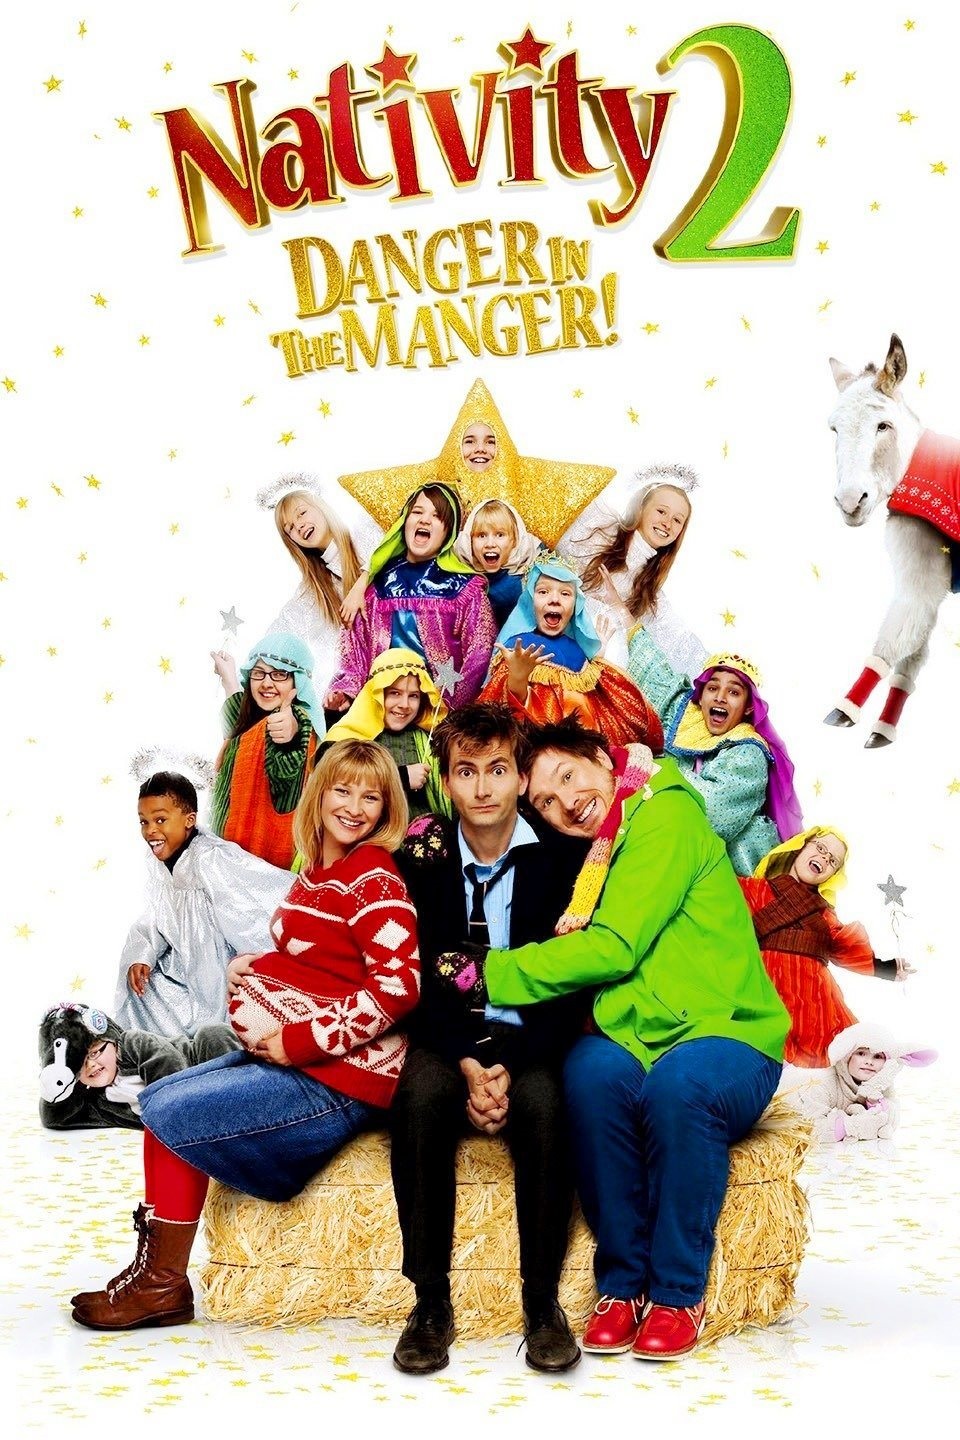 Nativity 2: Danger in the Manger [Sub-ITA] (2012)